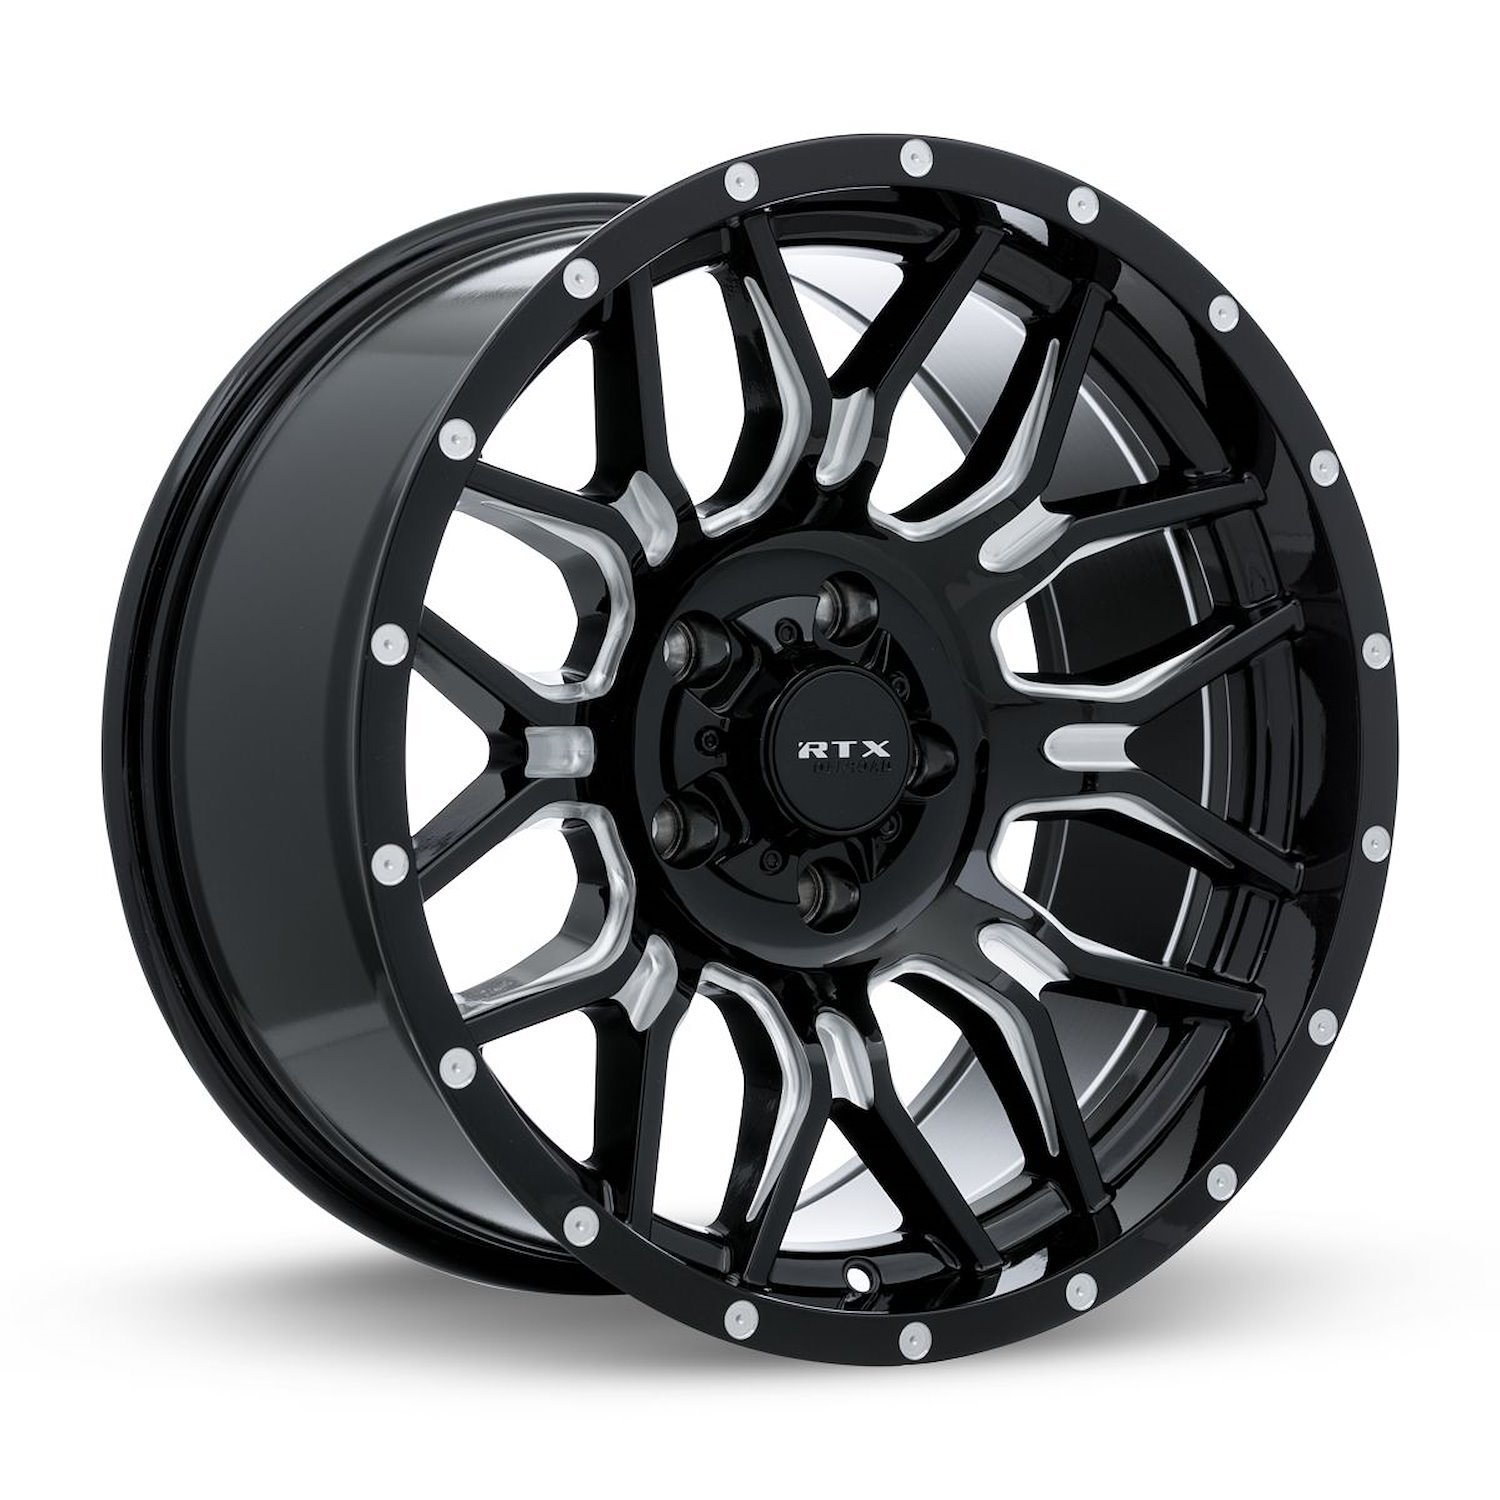 163727 Off-Road Series Claw Wheel [Size: 18" x 9"] Gloss Black Milled w/ Rivets Finish